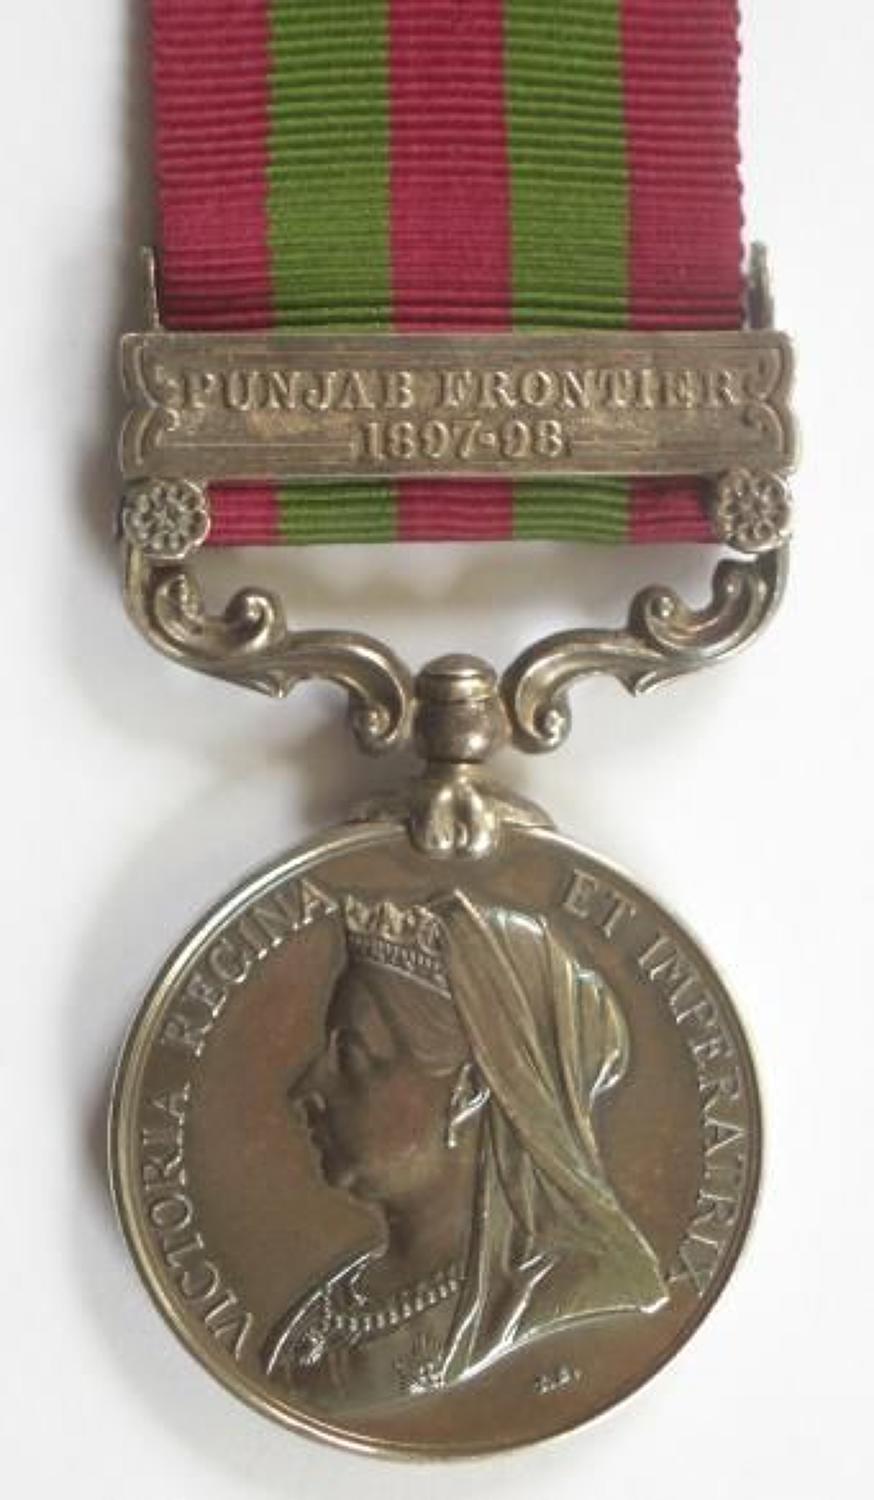 1st Bn Royal West Kent Regiment India General Service Medal, clasp